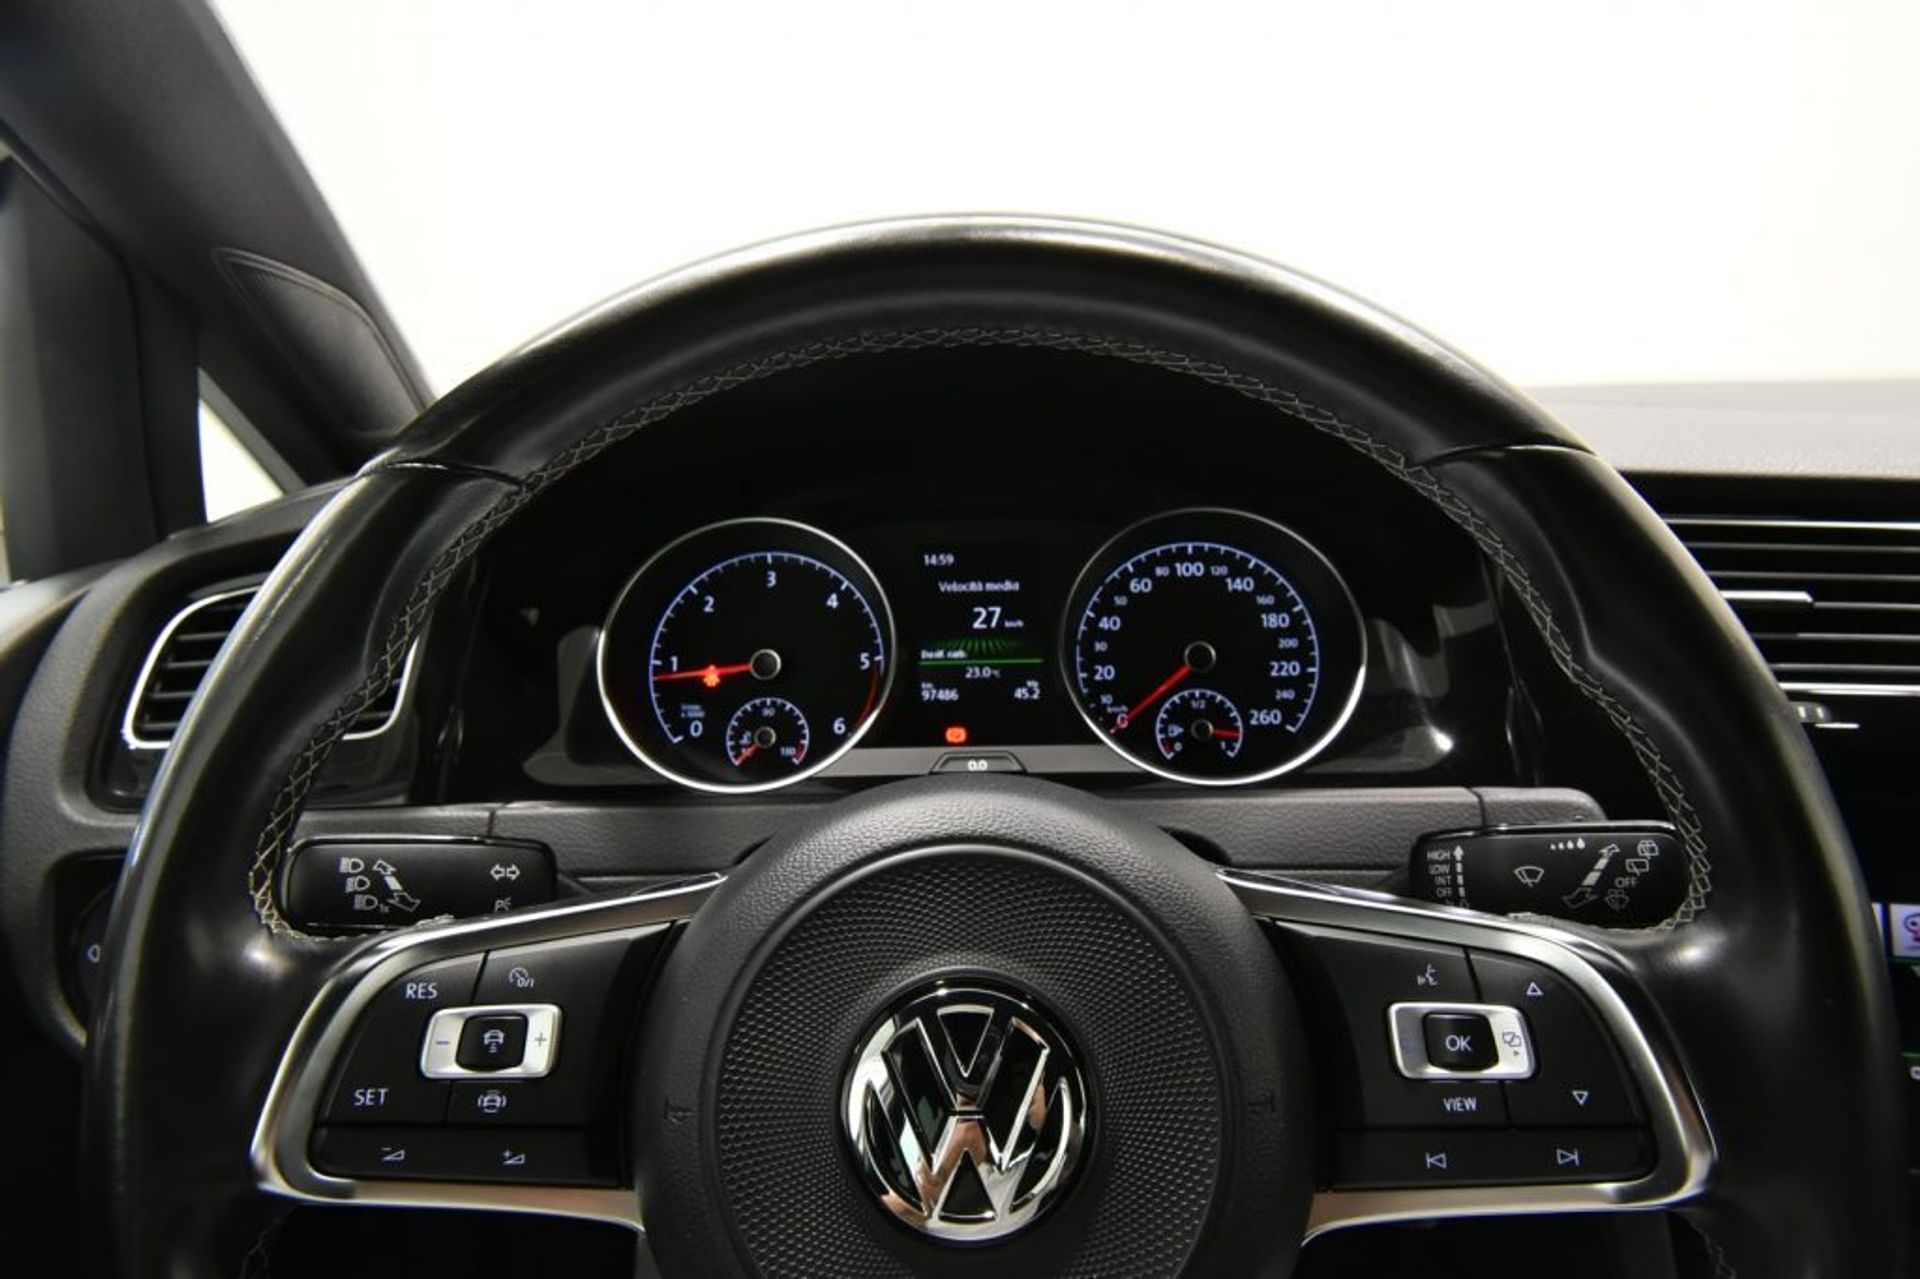 Volkswagen 1.6 TDI 115 CV - Volante